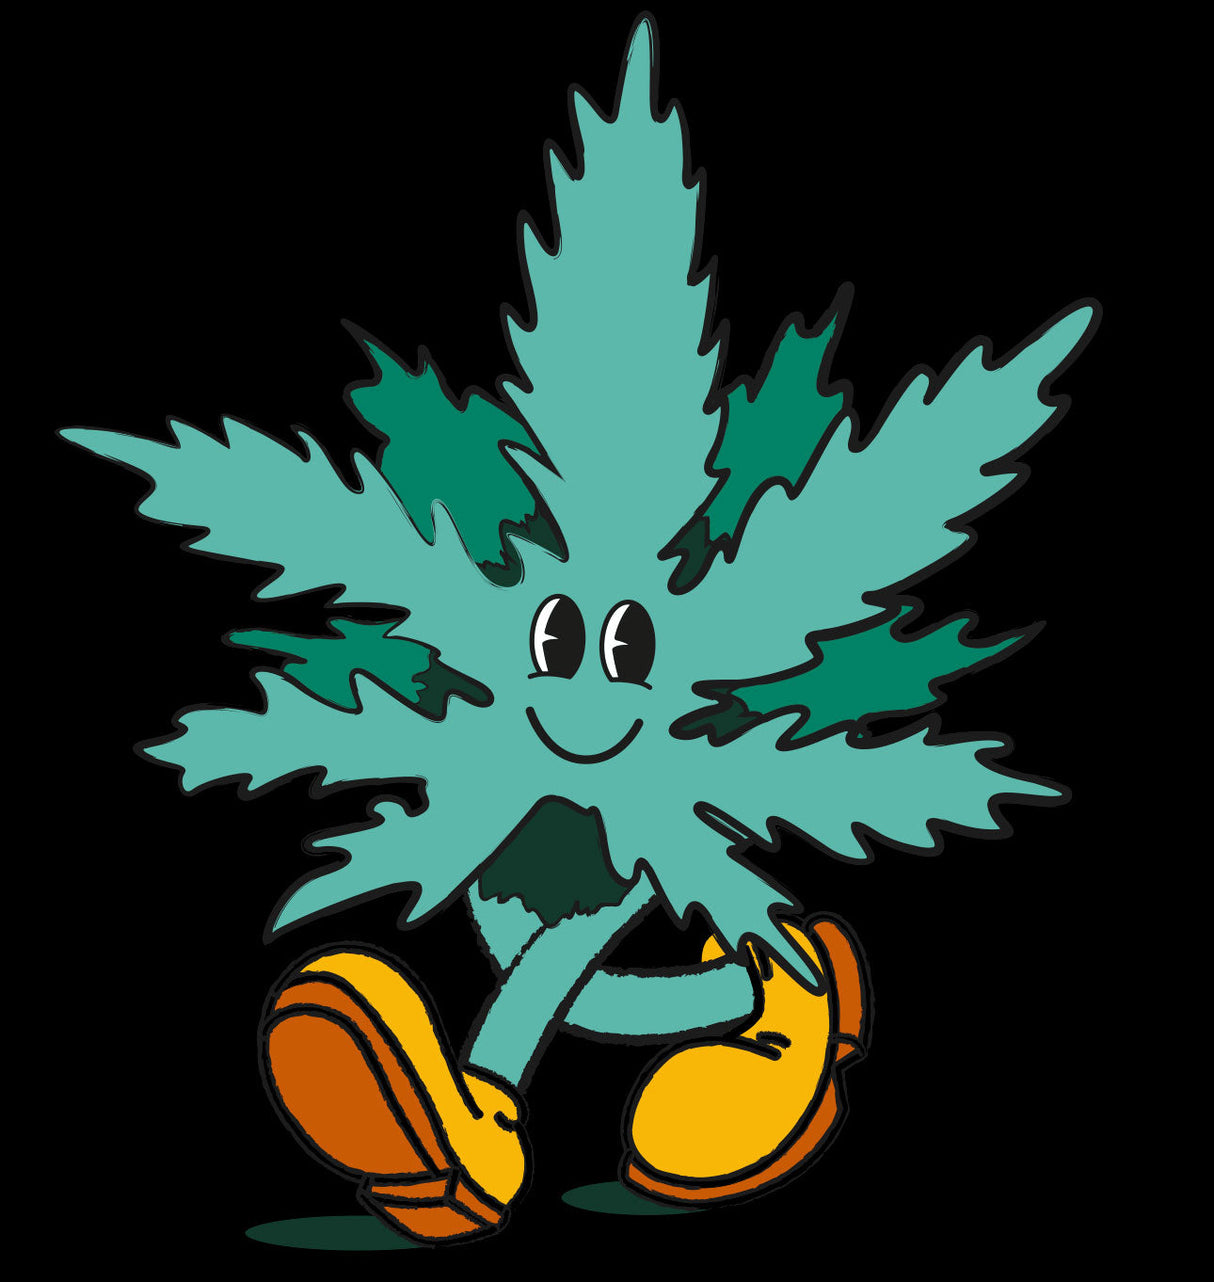 StonerDays Happy 420 Long Sleeve shirt design featuring a cartoon cannabis leaf character